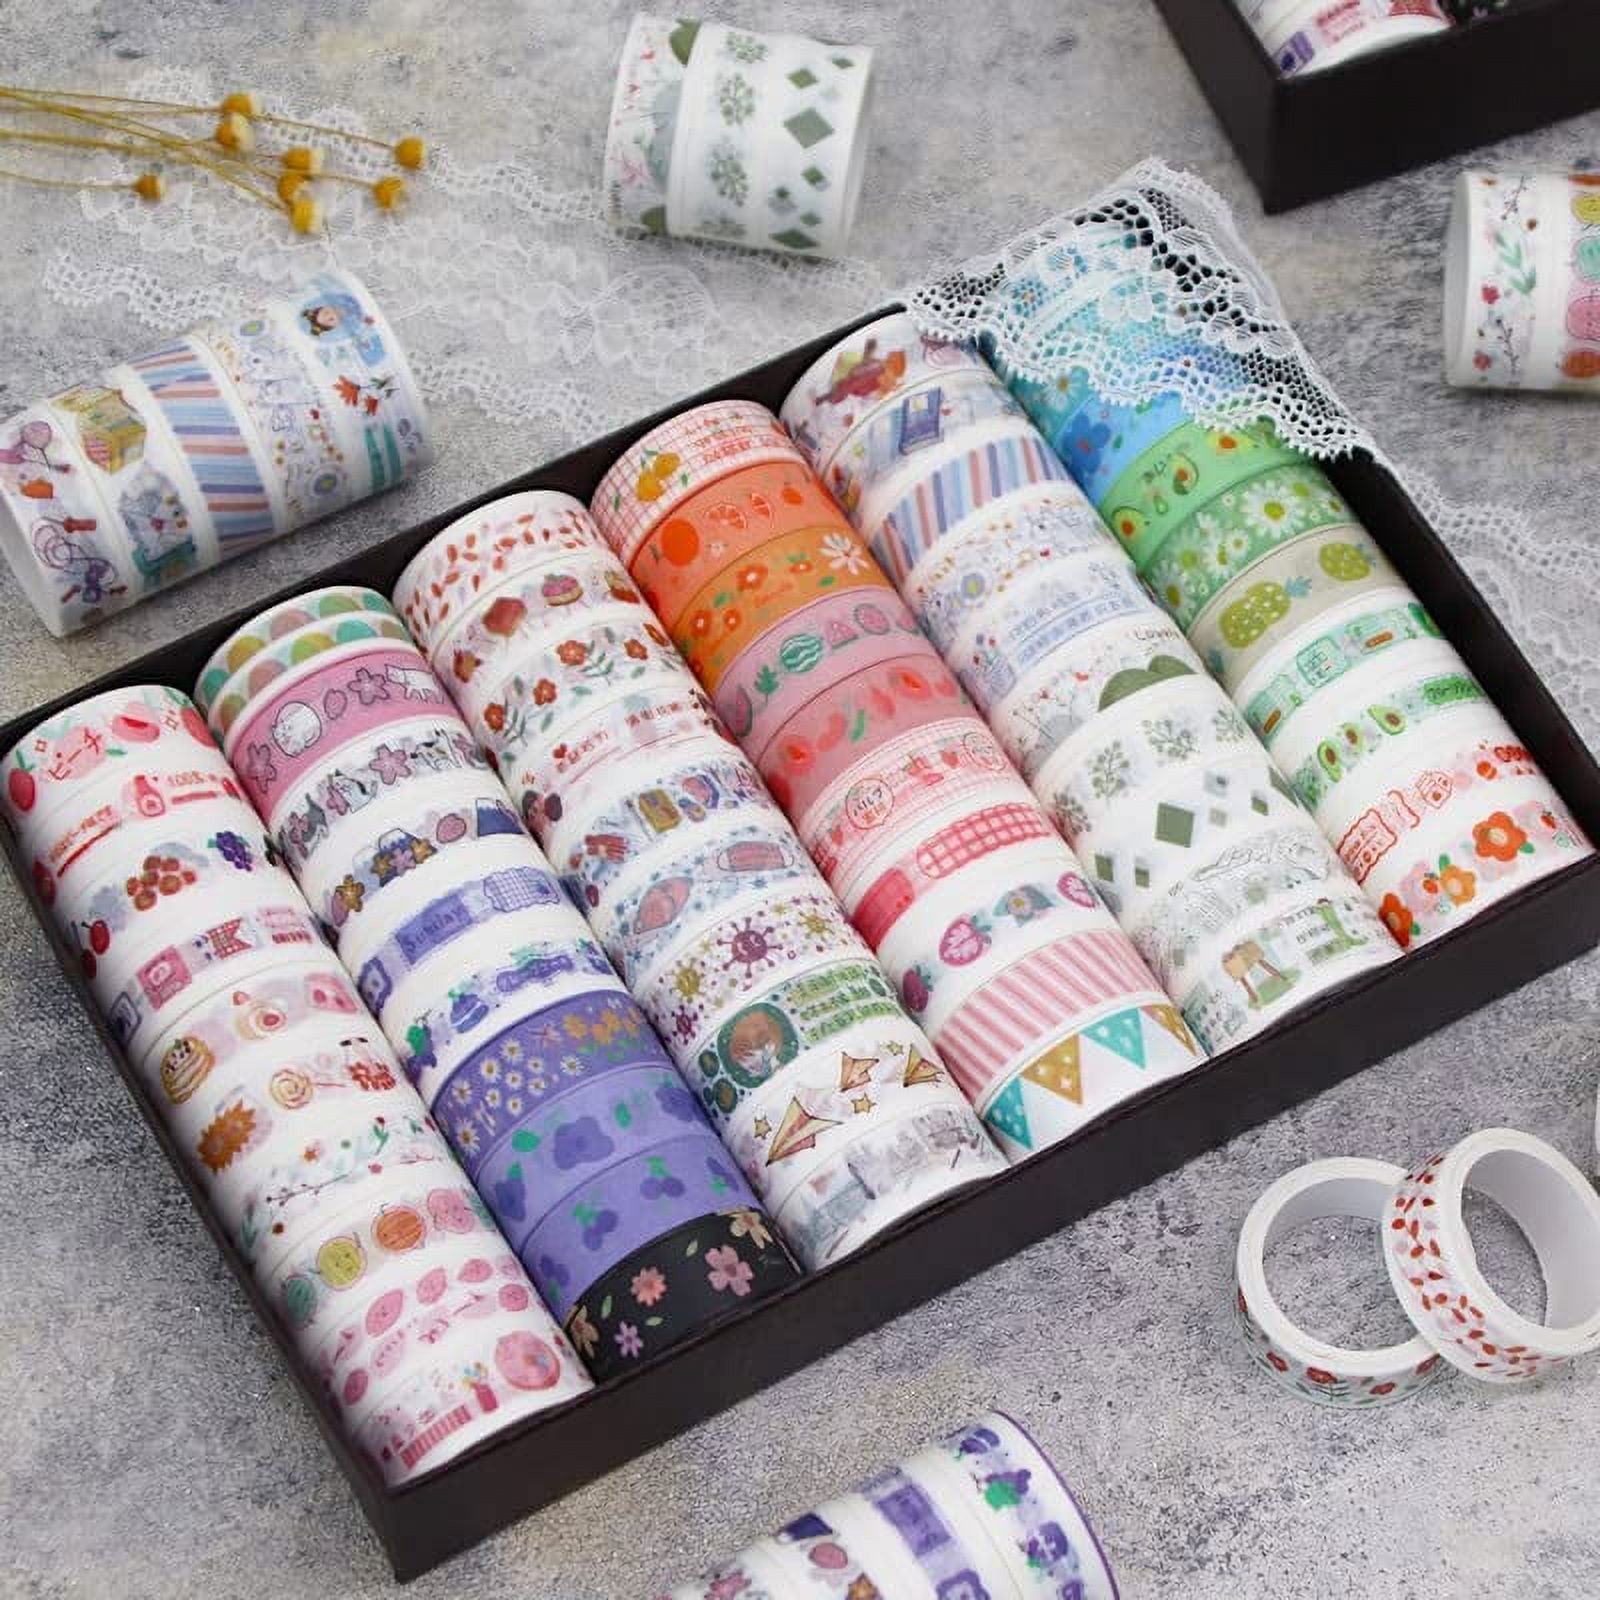 Pastel Rainbow Washi Tape - Cute Washi Tape - pride Washi Tape – LeonRomer